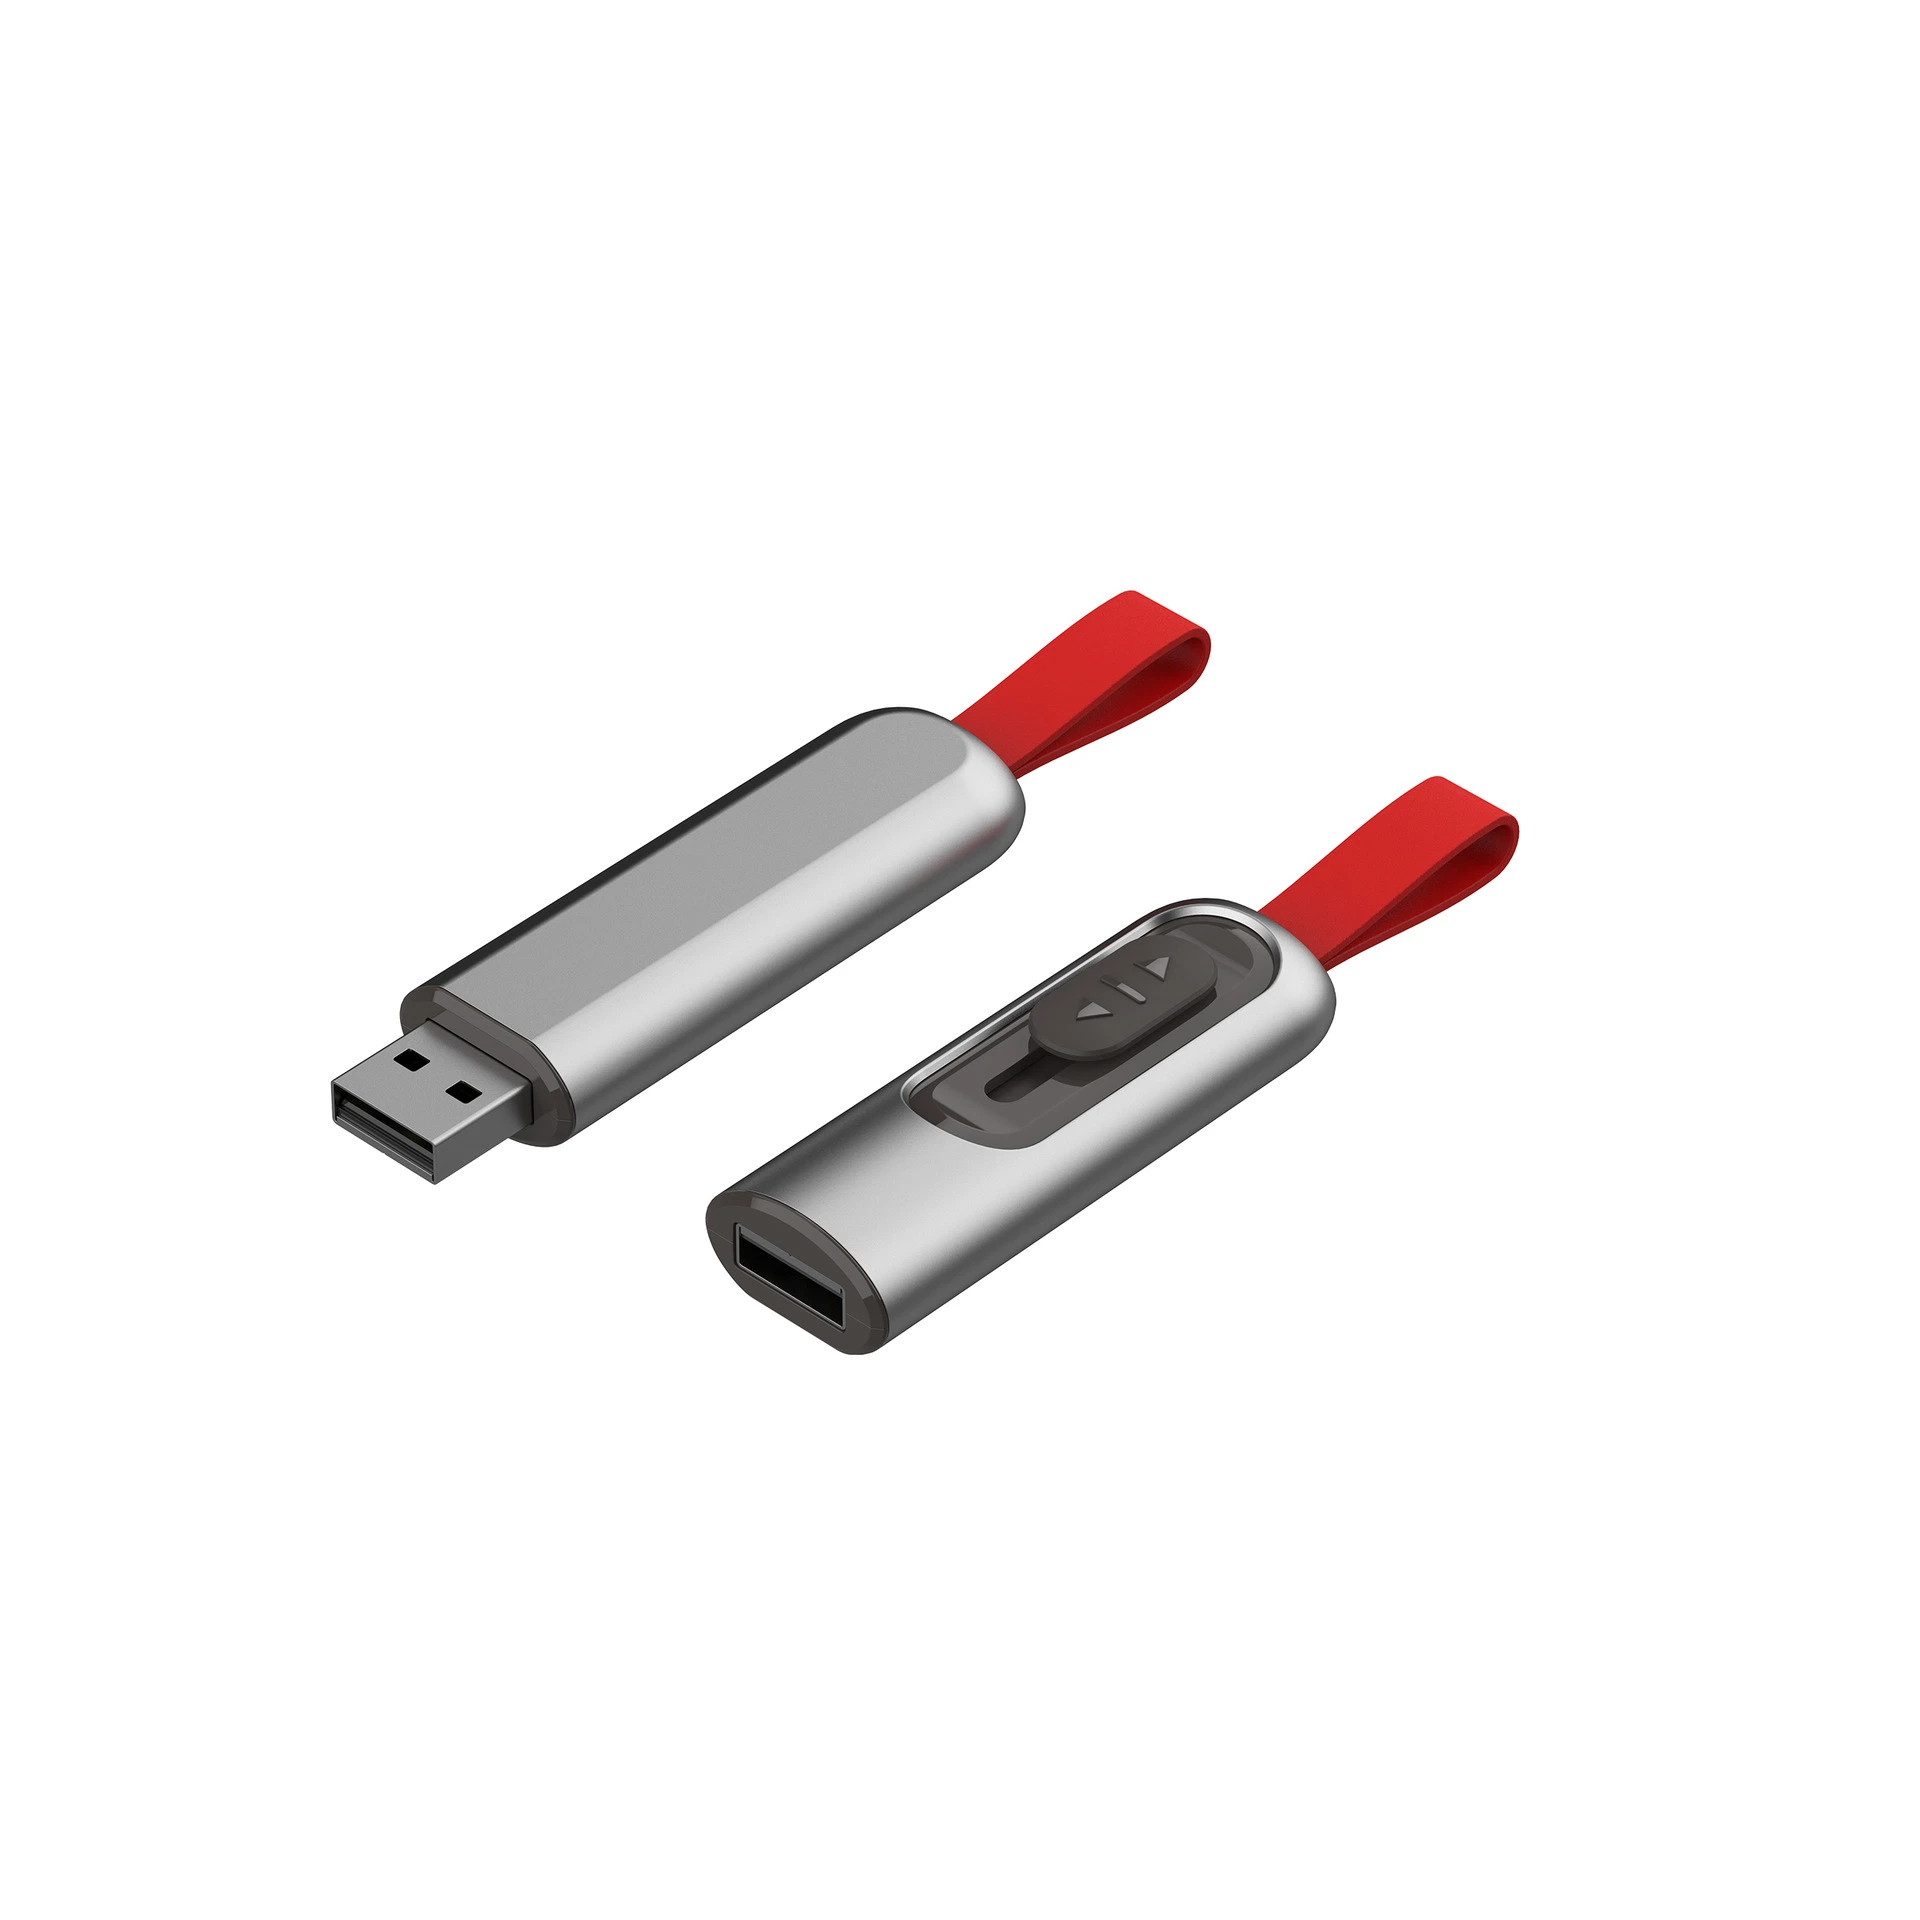 Unidade flash USB Fashion USB de oferta Flash Drive USB personalizada Pendrive do logo